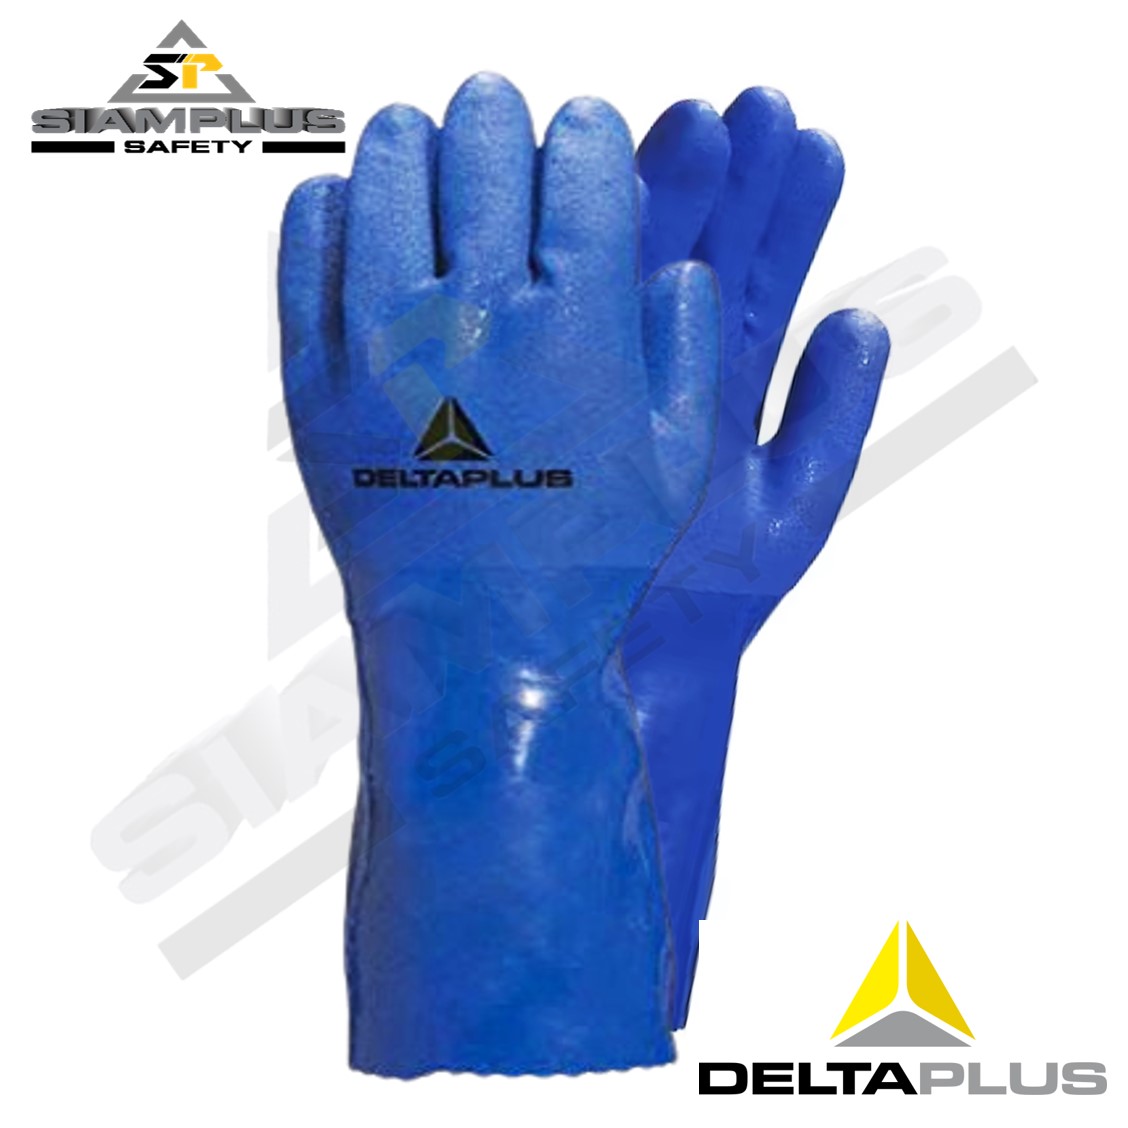 Guante de PVC Azul PETRO VE780 Delta Plus - Siamplus Safety